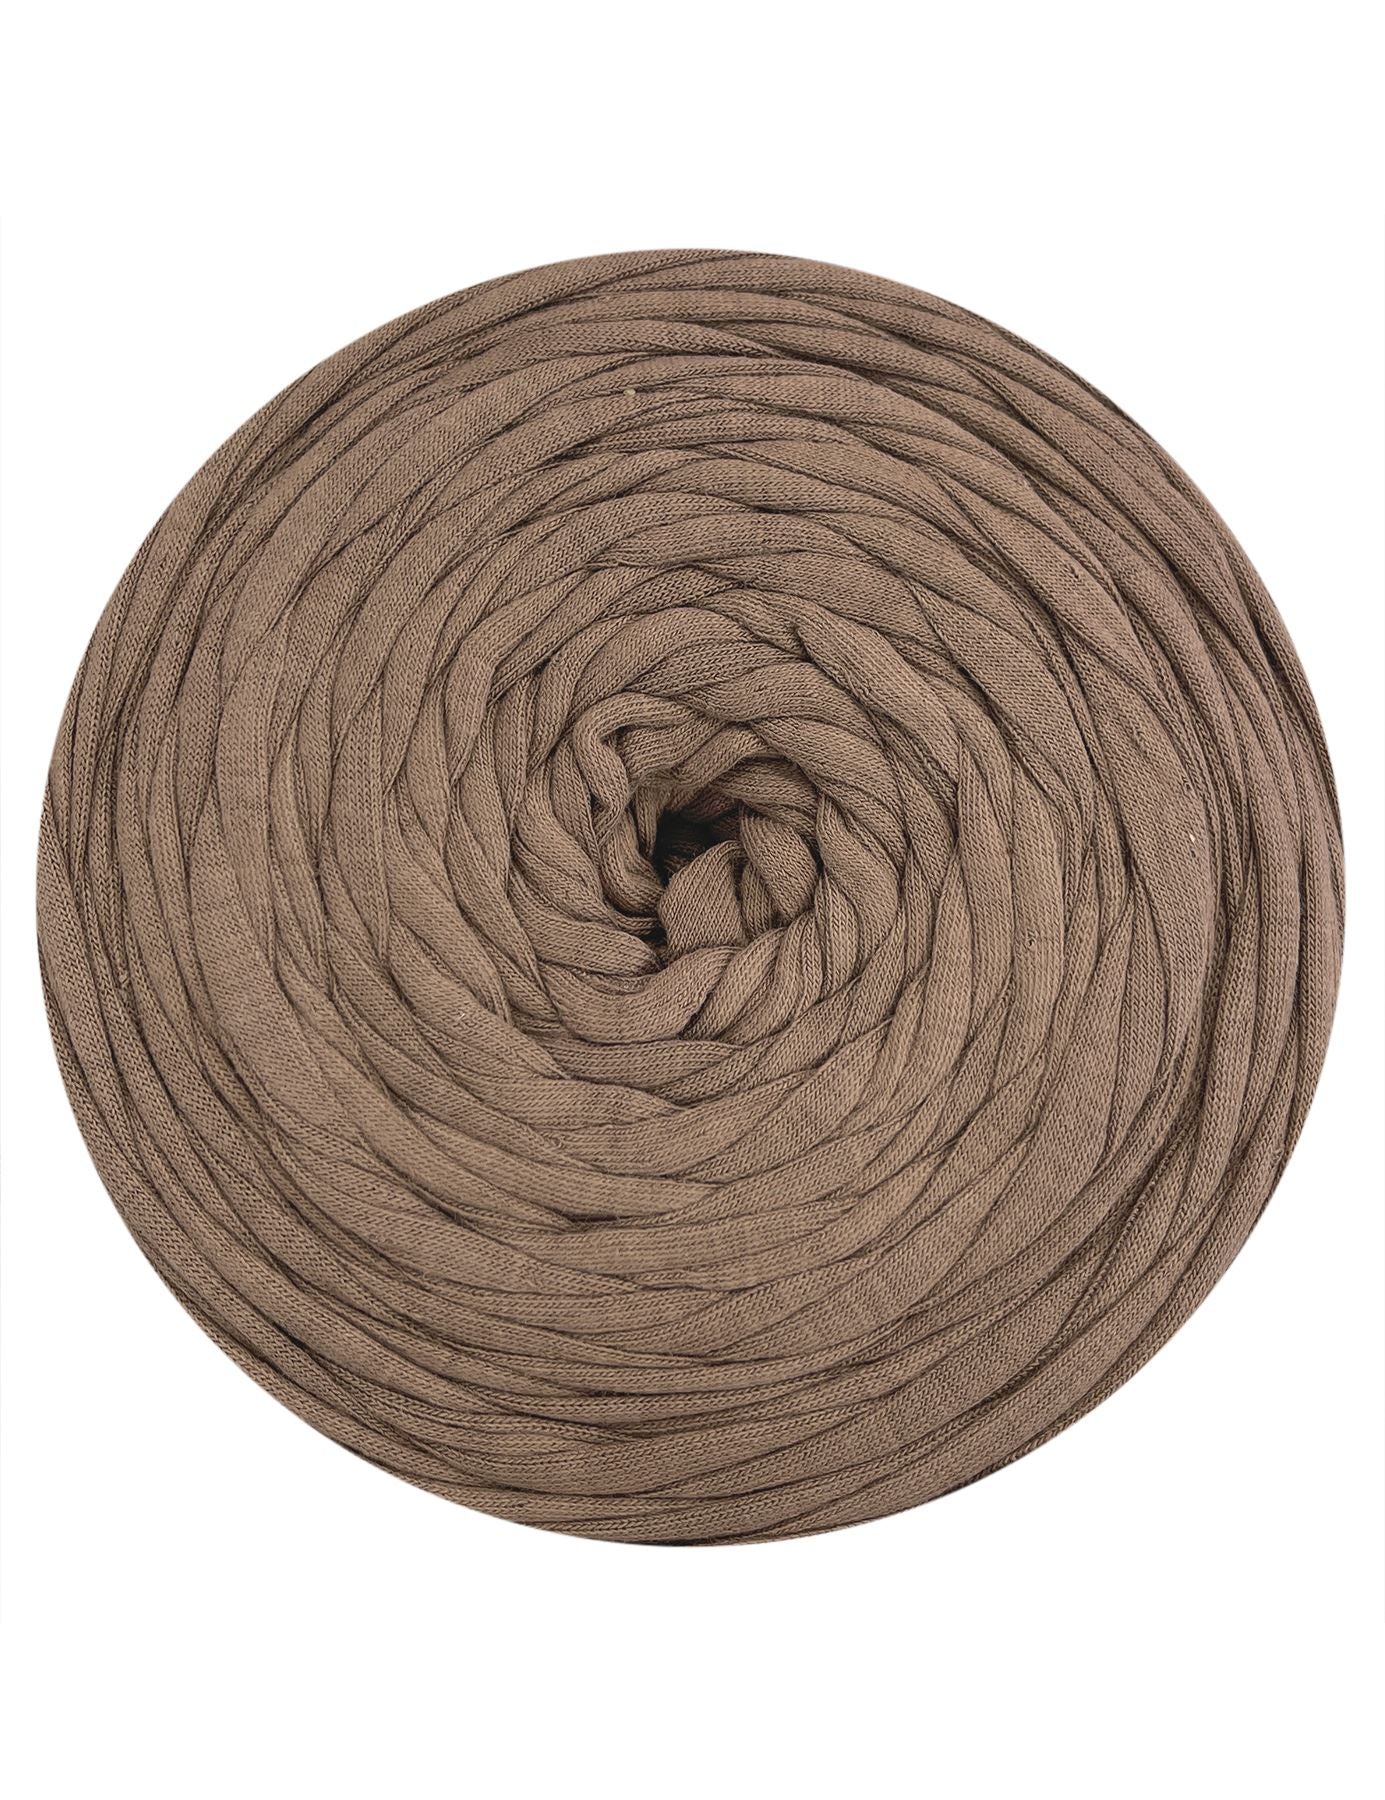 Muted pecan brown t-shirt yarn (100-120m)